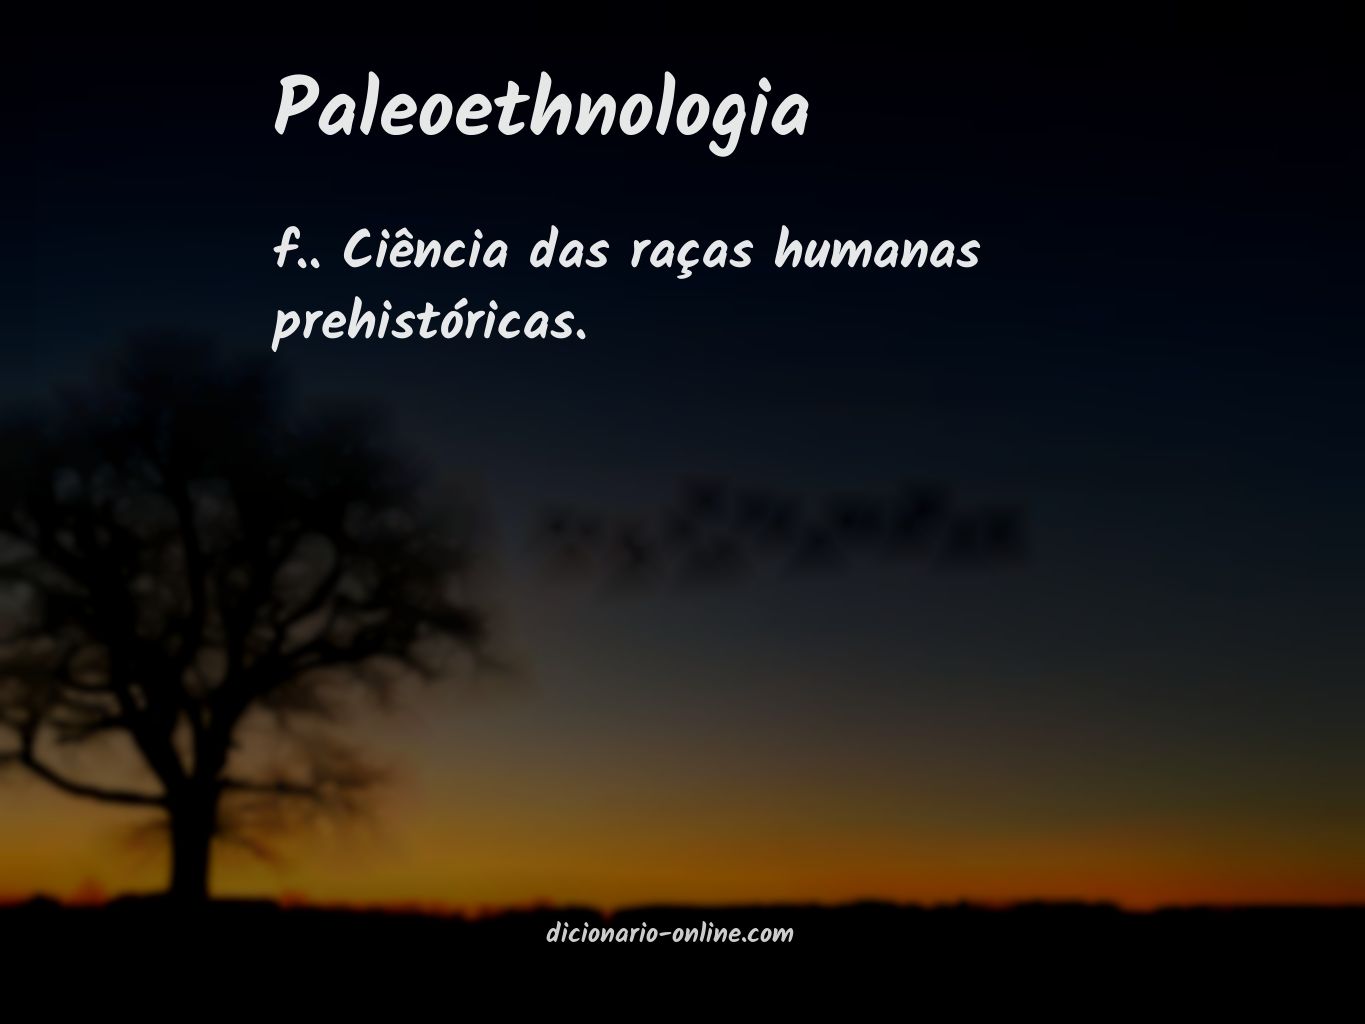 Significado de paleoethnologia